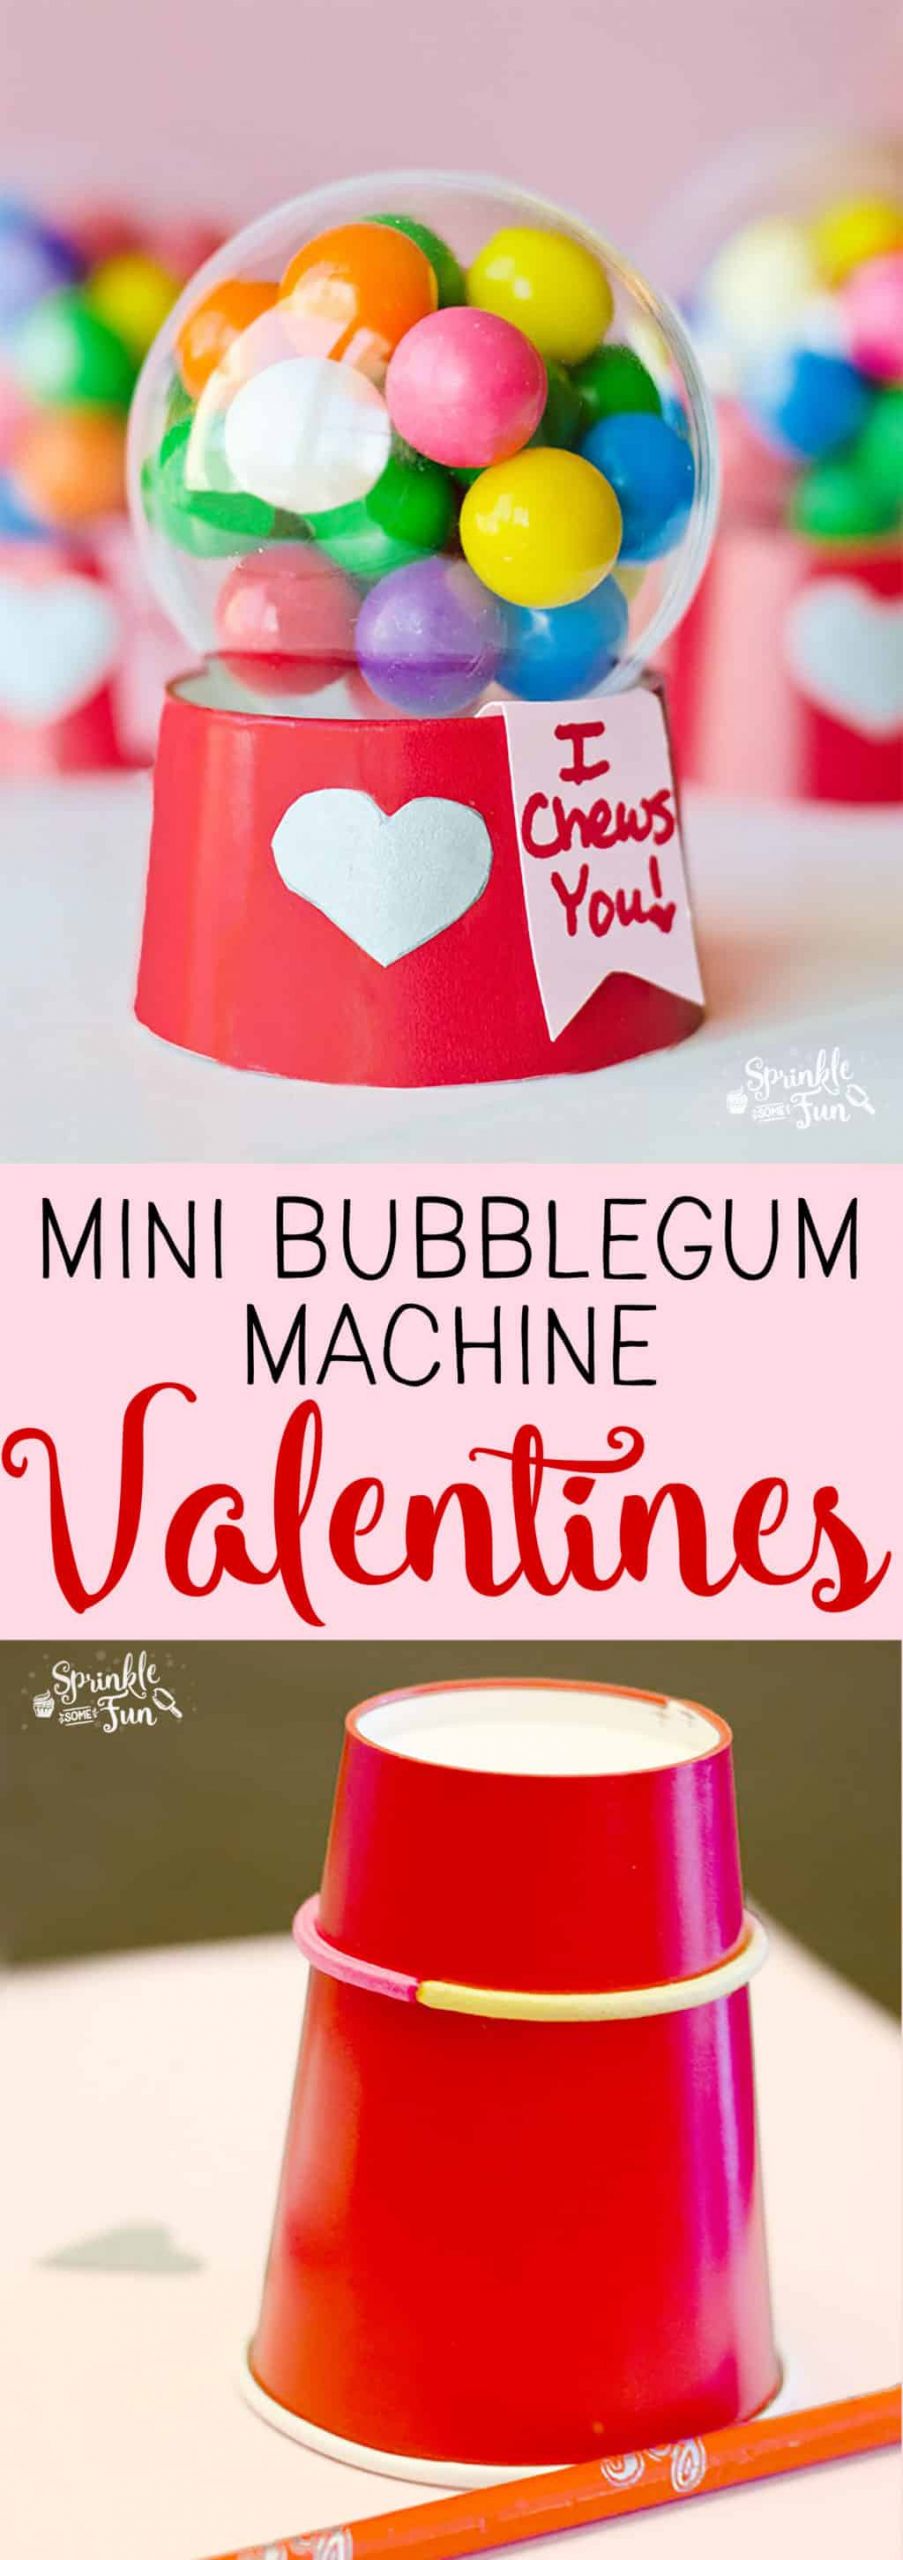 Valentine Gifts For Kids
 Mini Bubblegum Machine Valentines